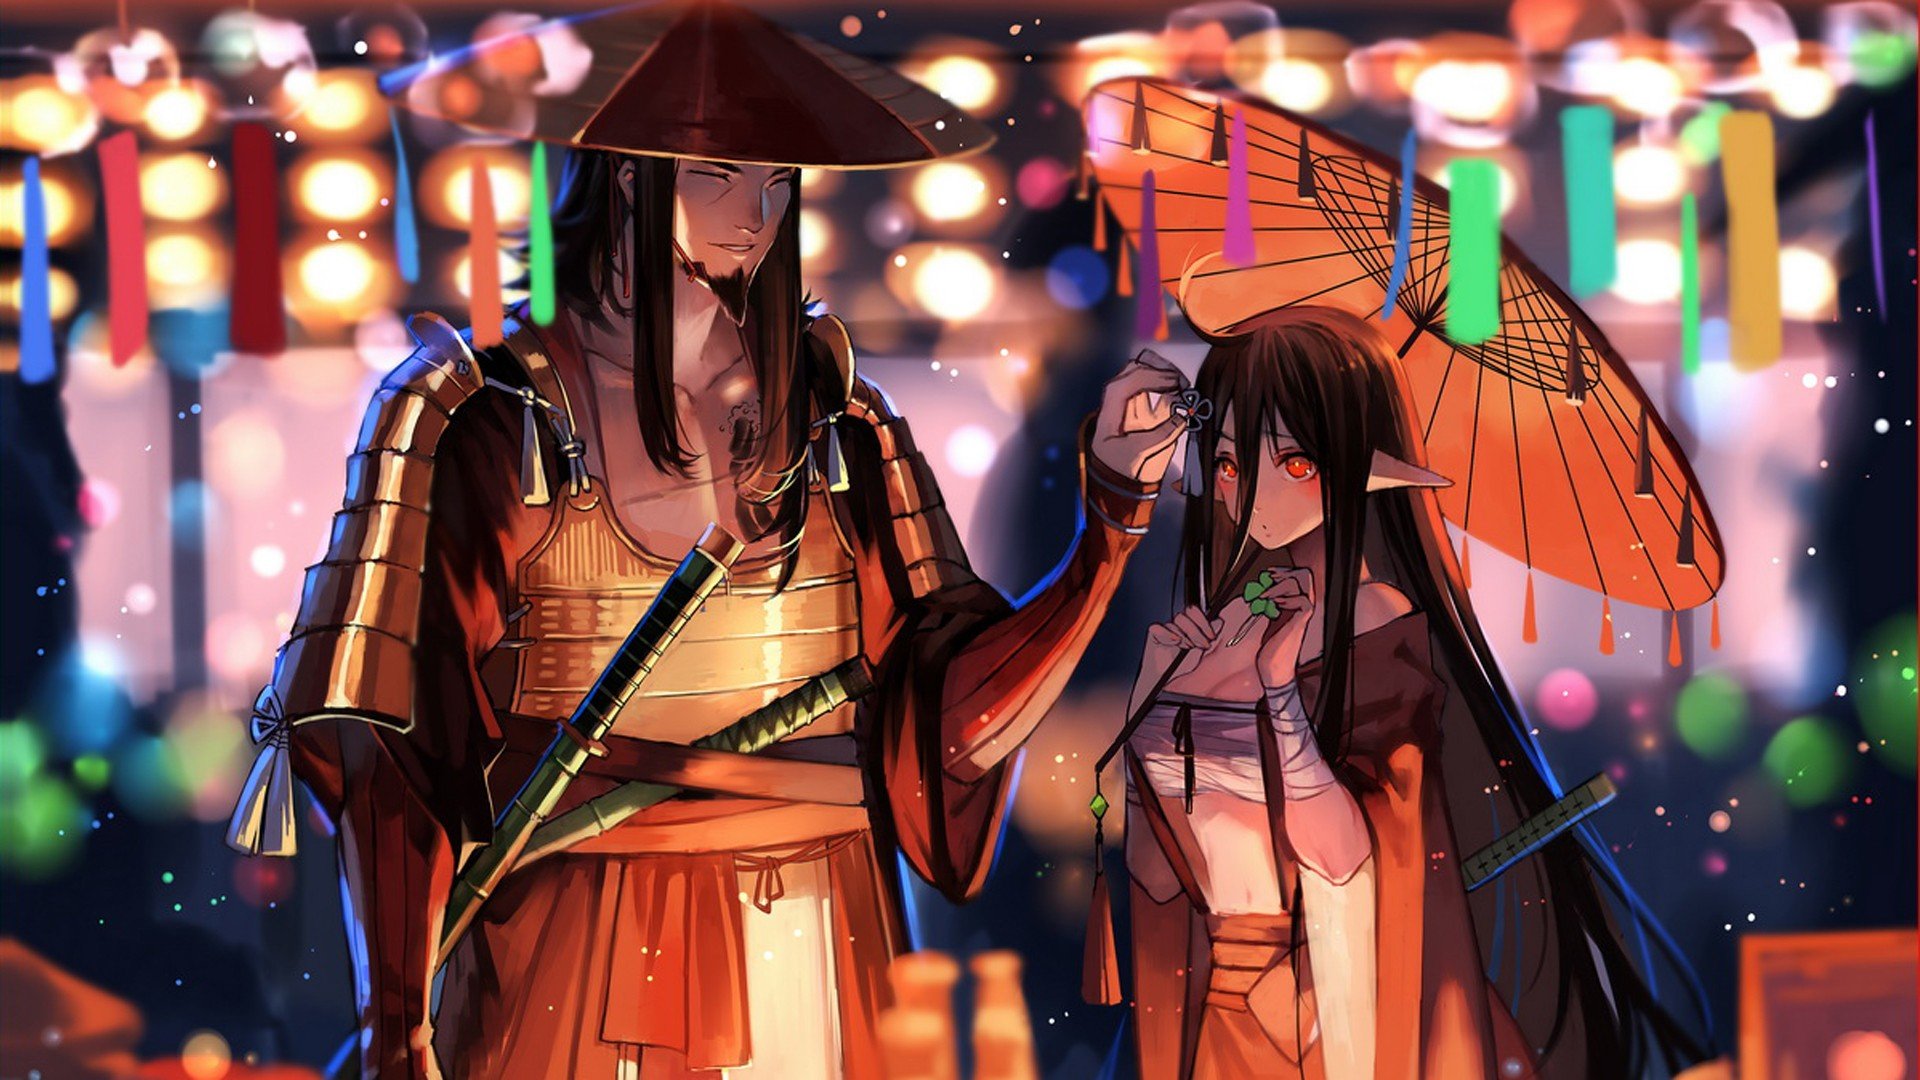 Anime Girls Samurai Pixiv Fantasia Wallpapers Hd Desktop And Mobile Backgrounds